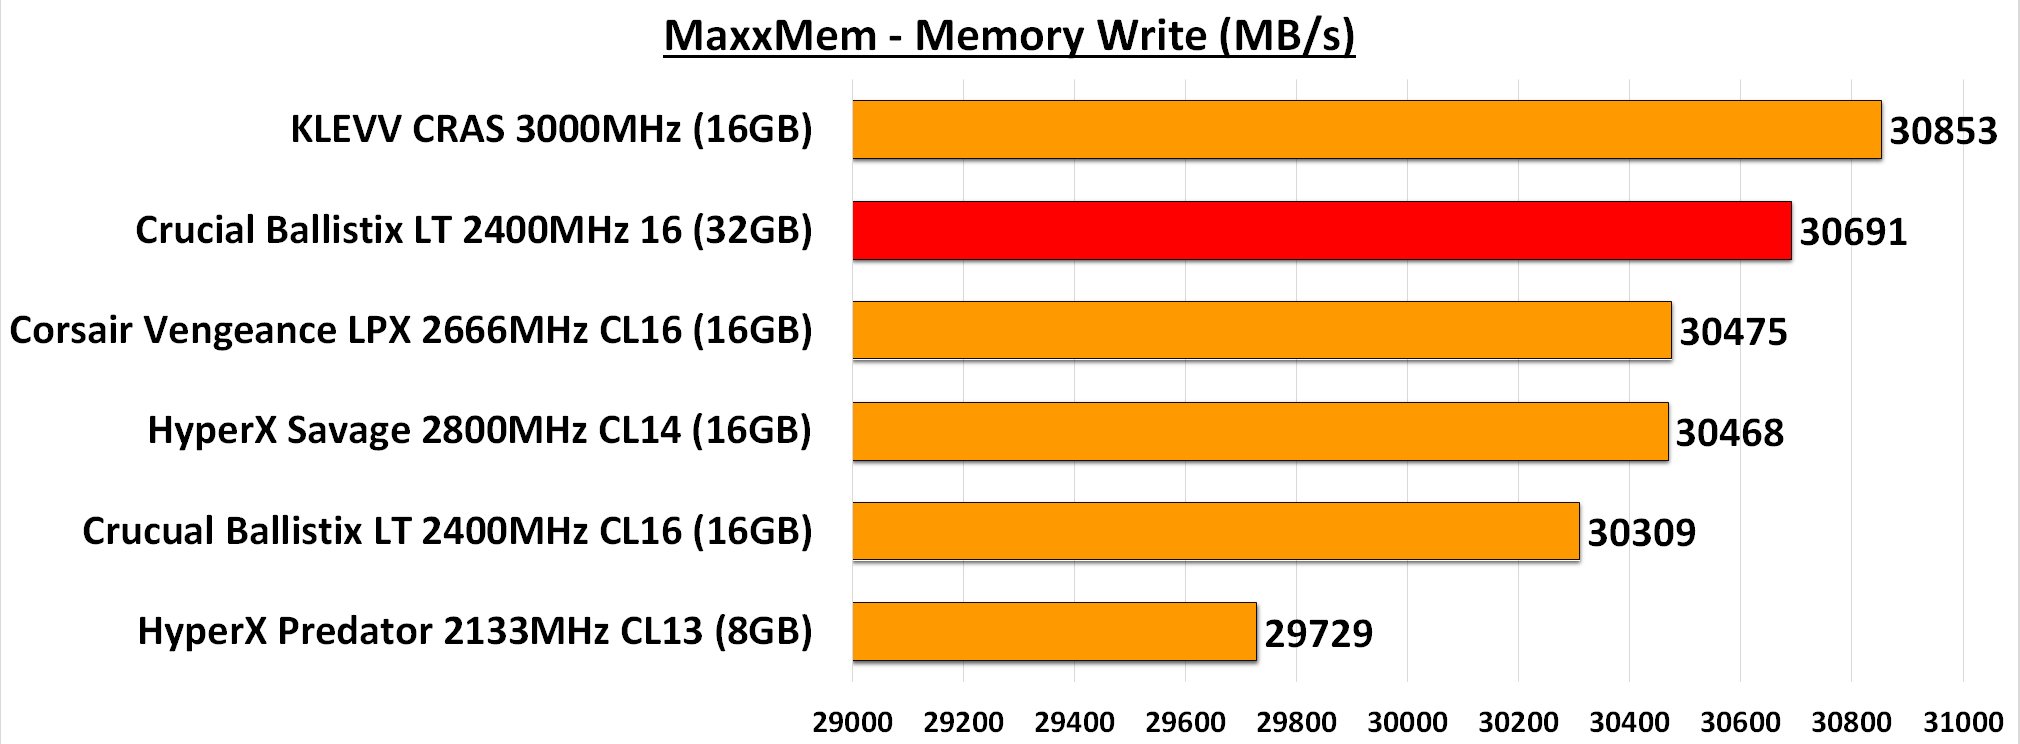 MaxxMem Memory Write